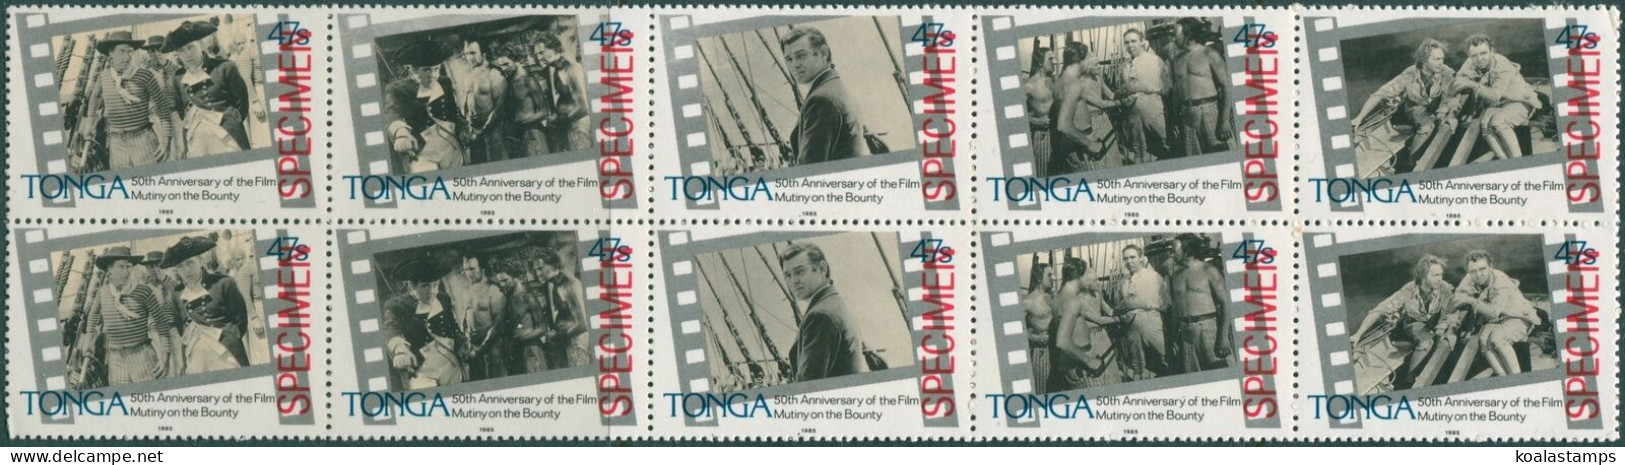 Tonga 1985 SG910a Mutiny On The Bounty Film SPECIMEN Pairs Strip Of 5 MNH - Tonga (1970-...)